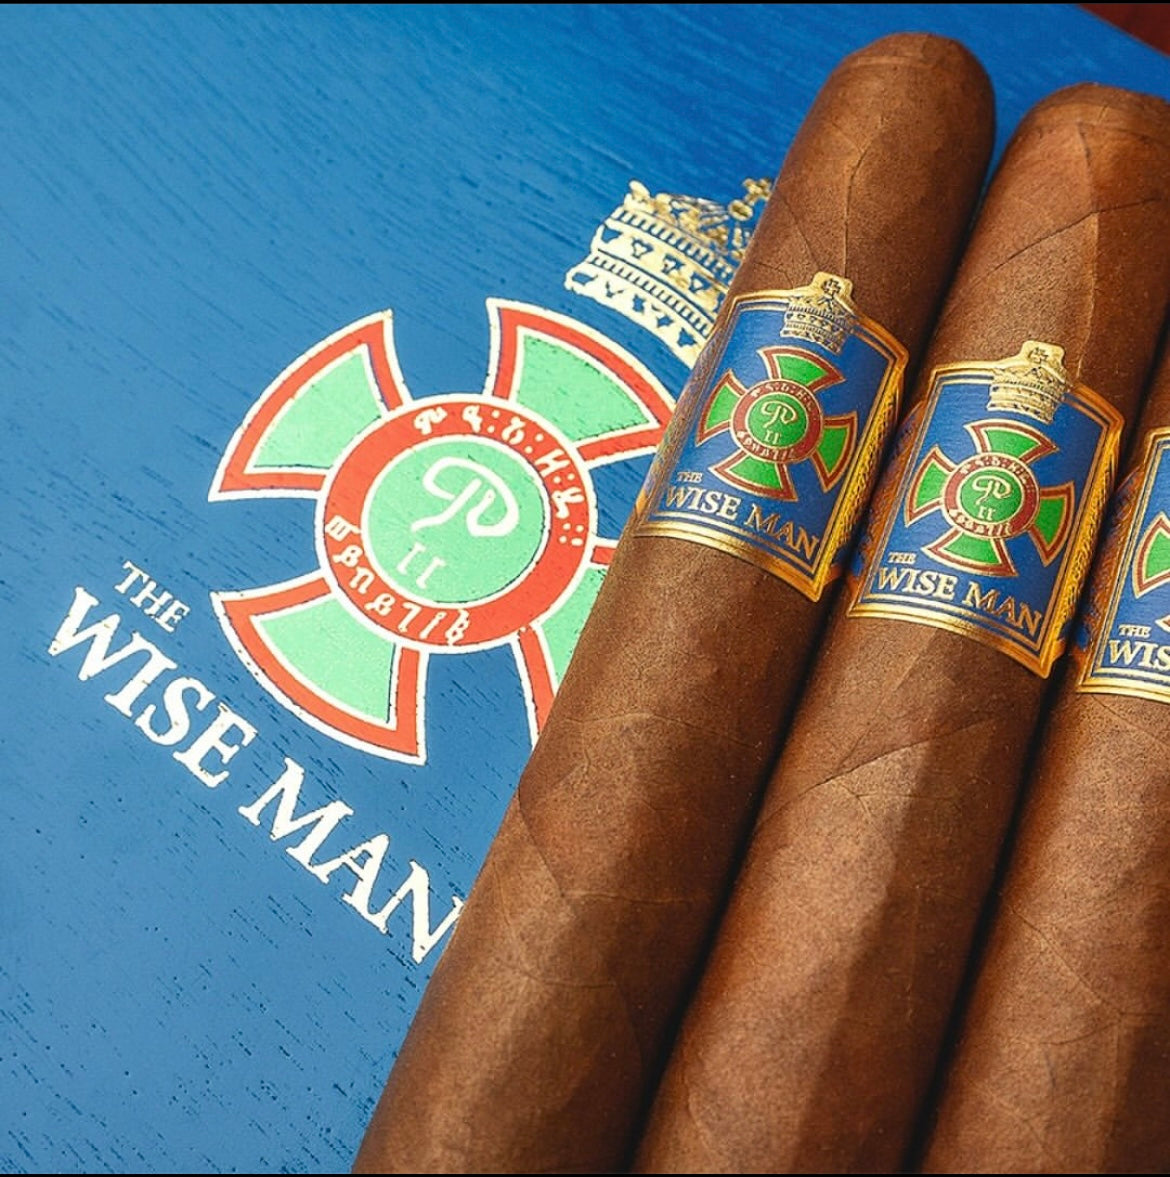 Foundation Cigars - The Wise Man Corojo Toro